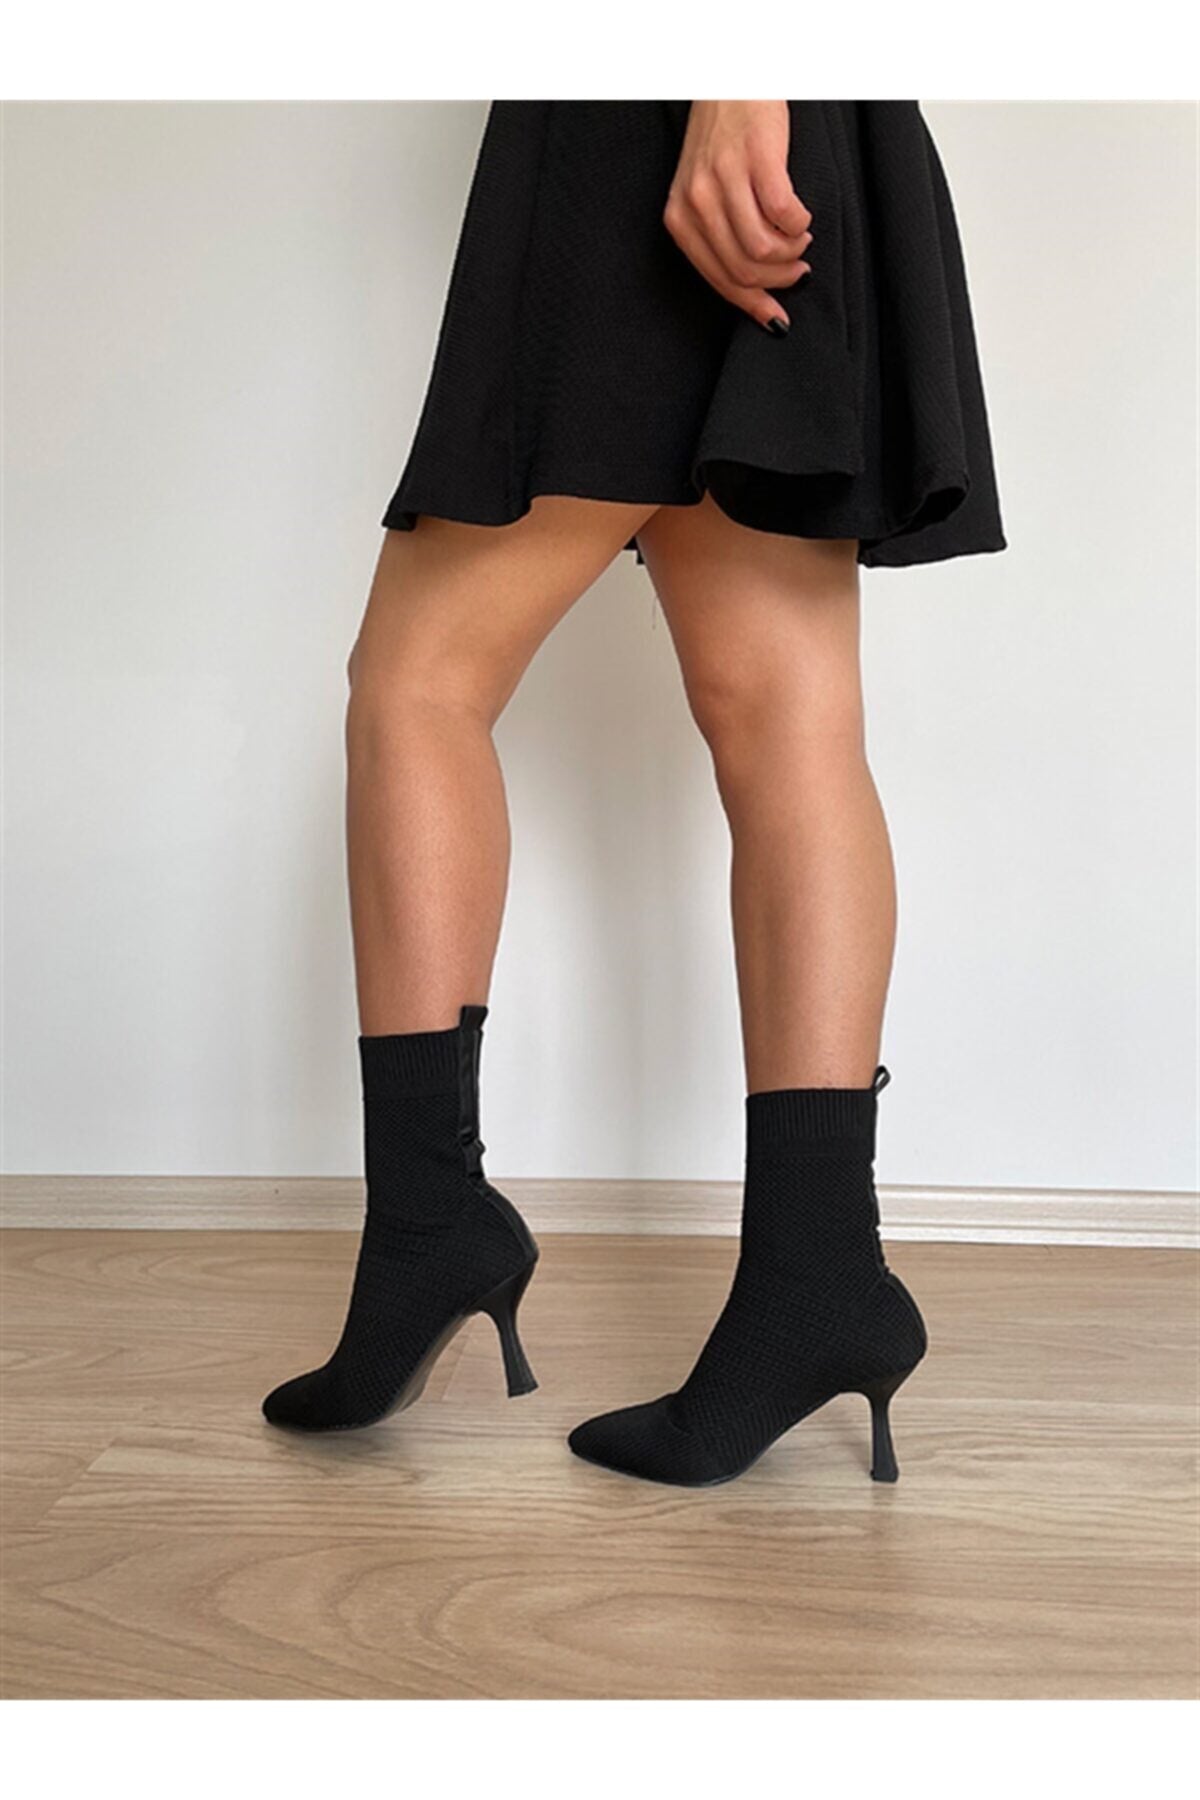 Line black line detailed knitwear woman heeled boots